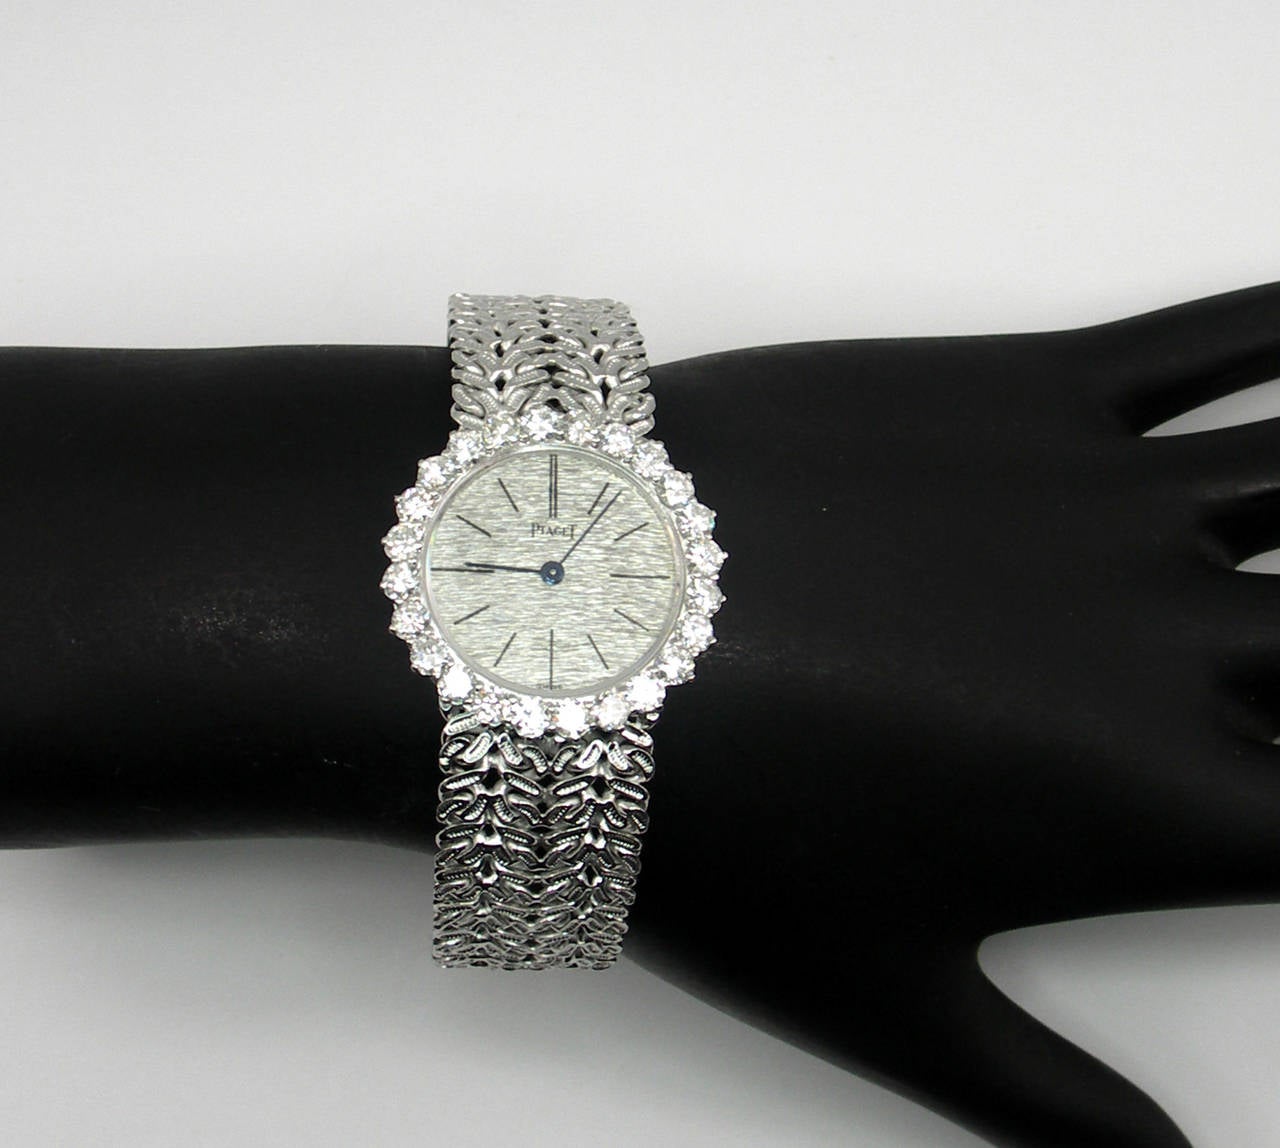 Women's Piaget Lady's White Gold Diamond Bezel Wristwatch